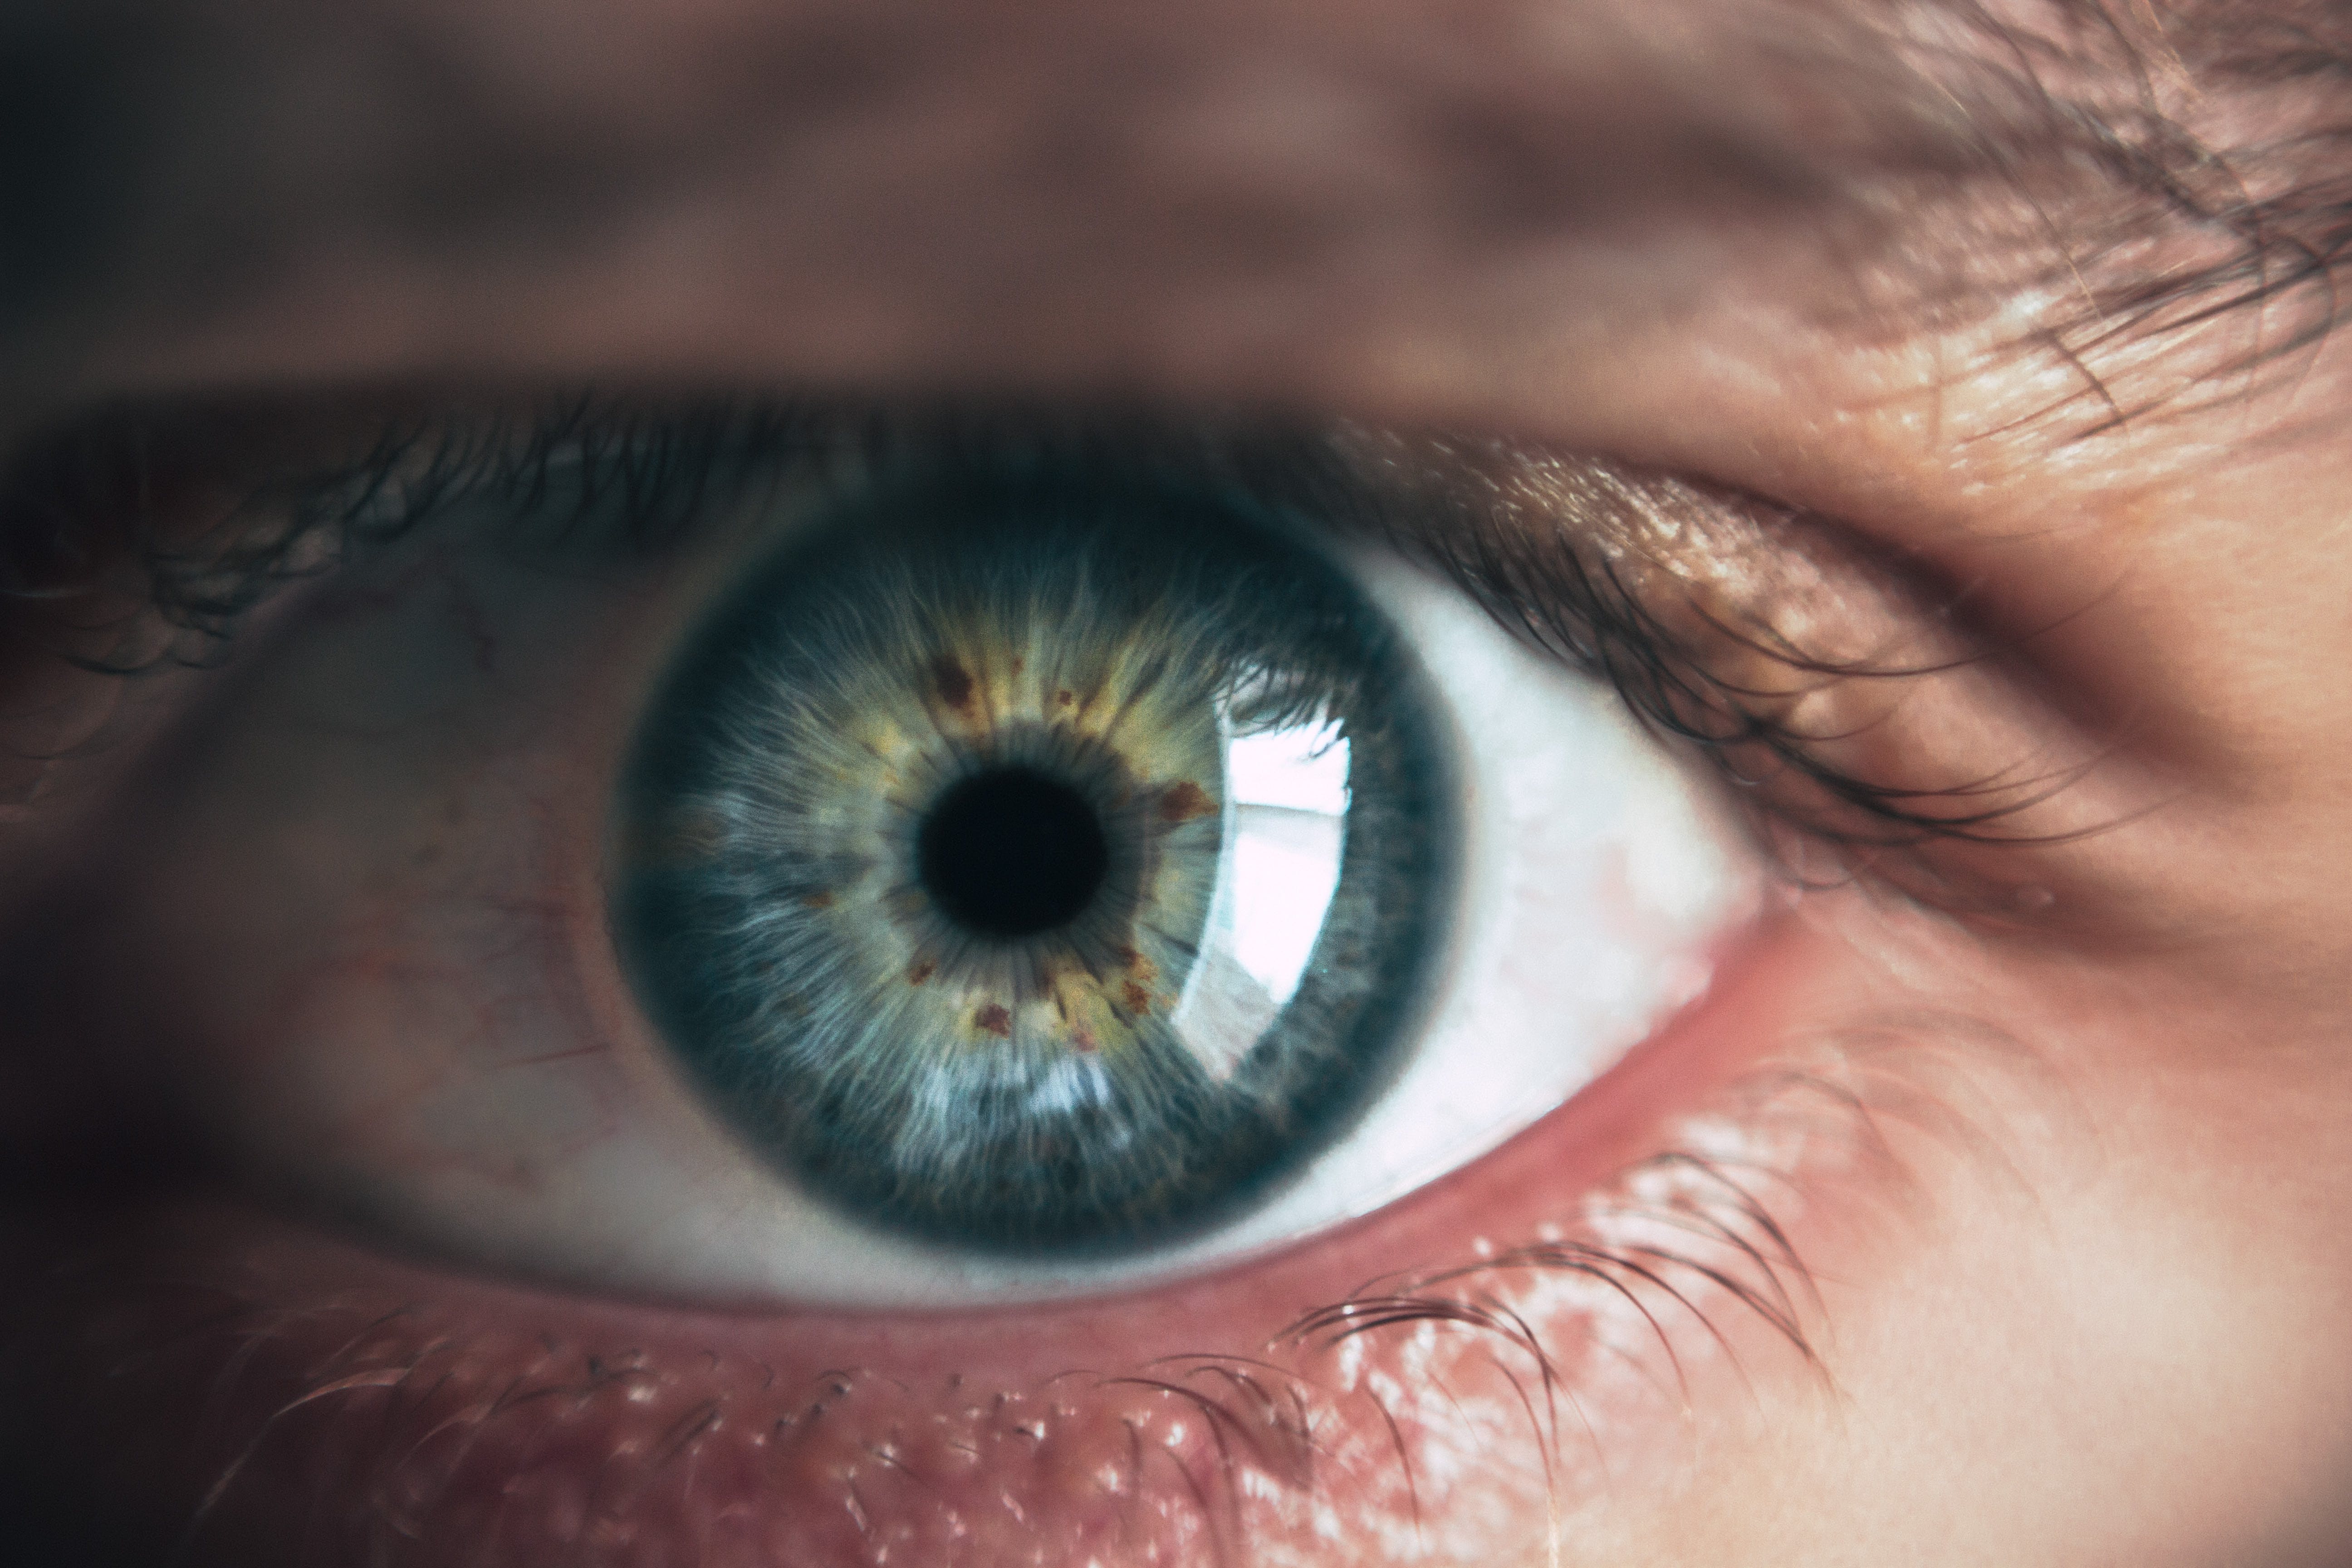 Extreme closeup of a human eye.